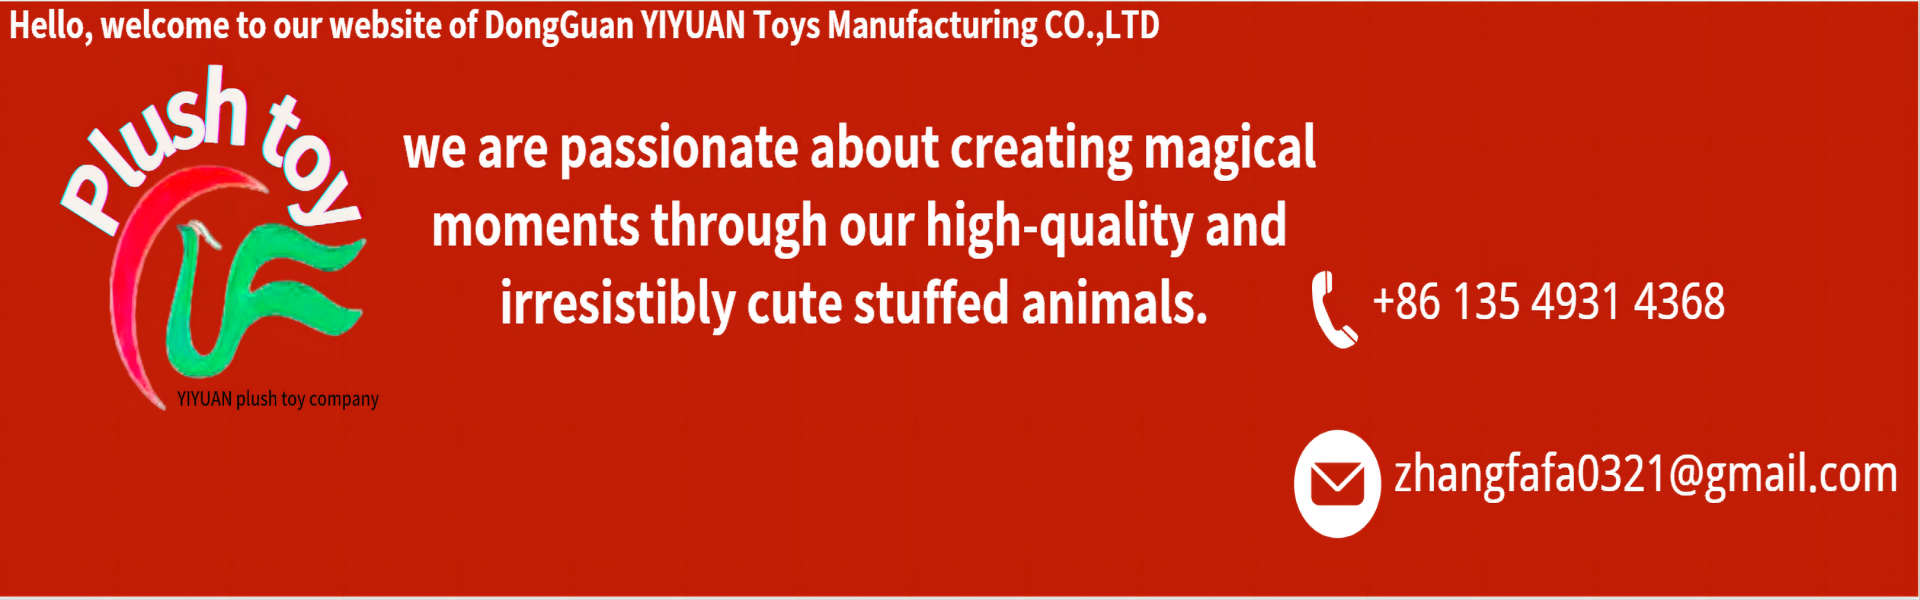 Plüschspielzeug, hochwertige, professionelle R&D-Teams,yiyuan plush toy company